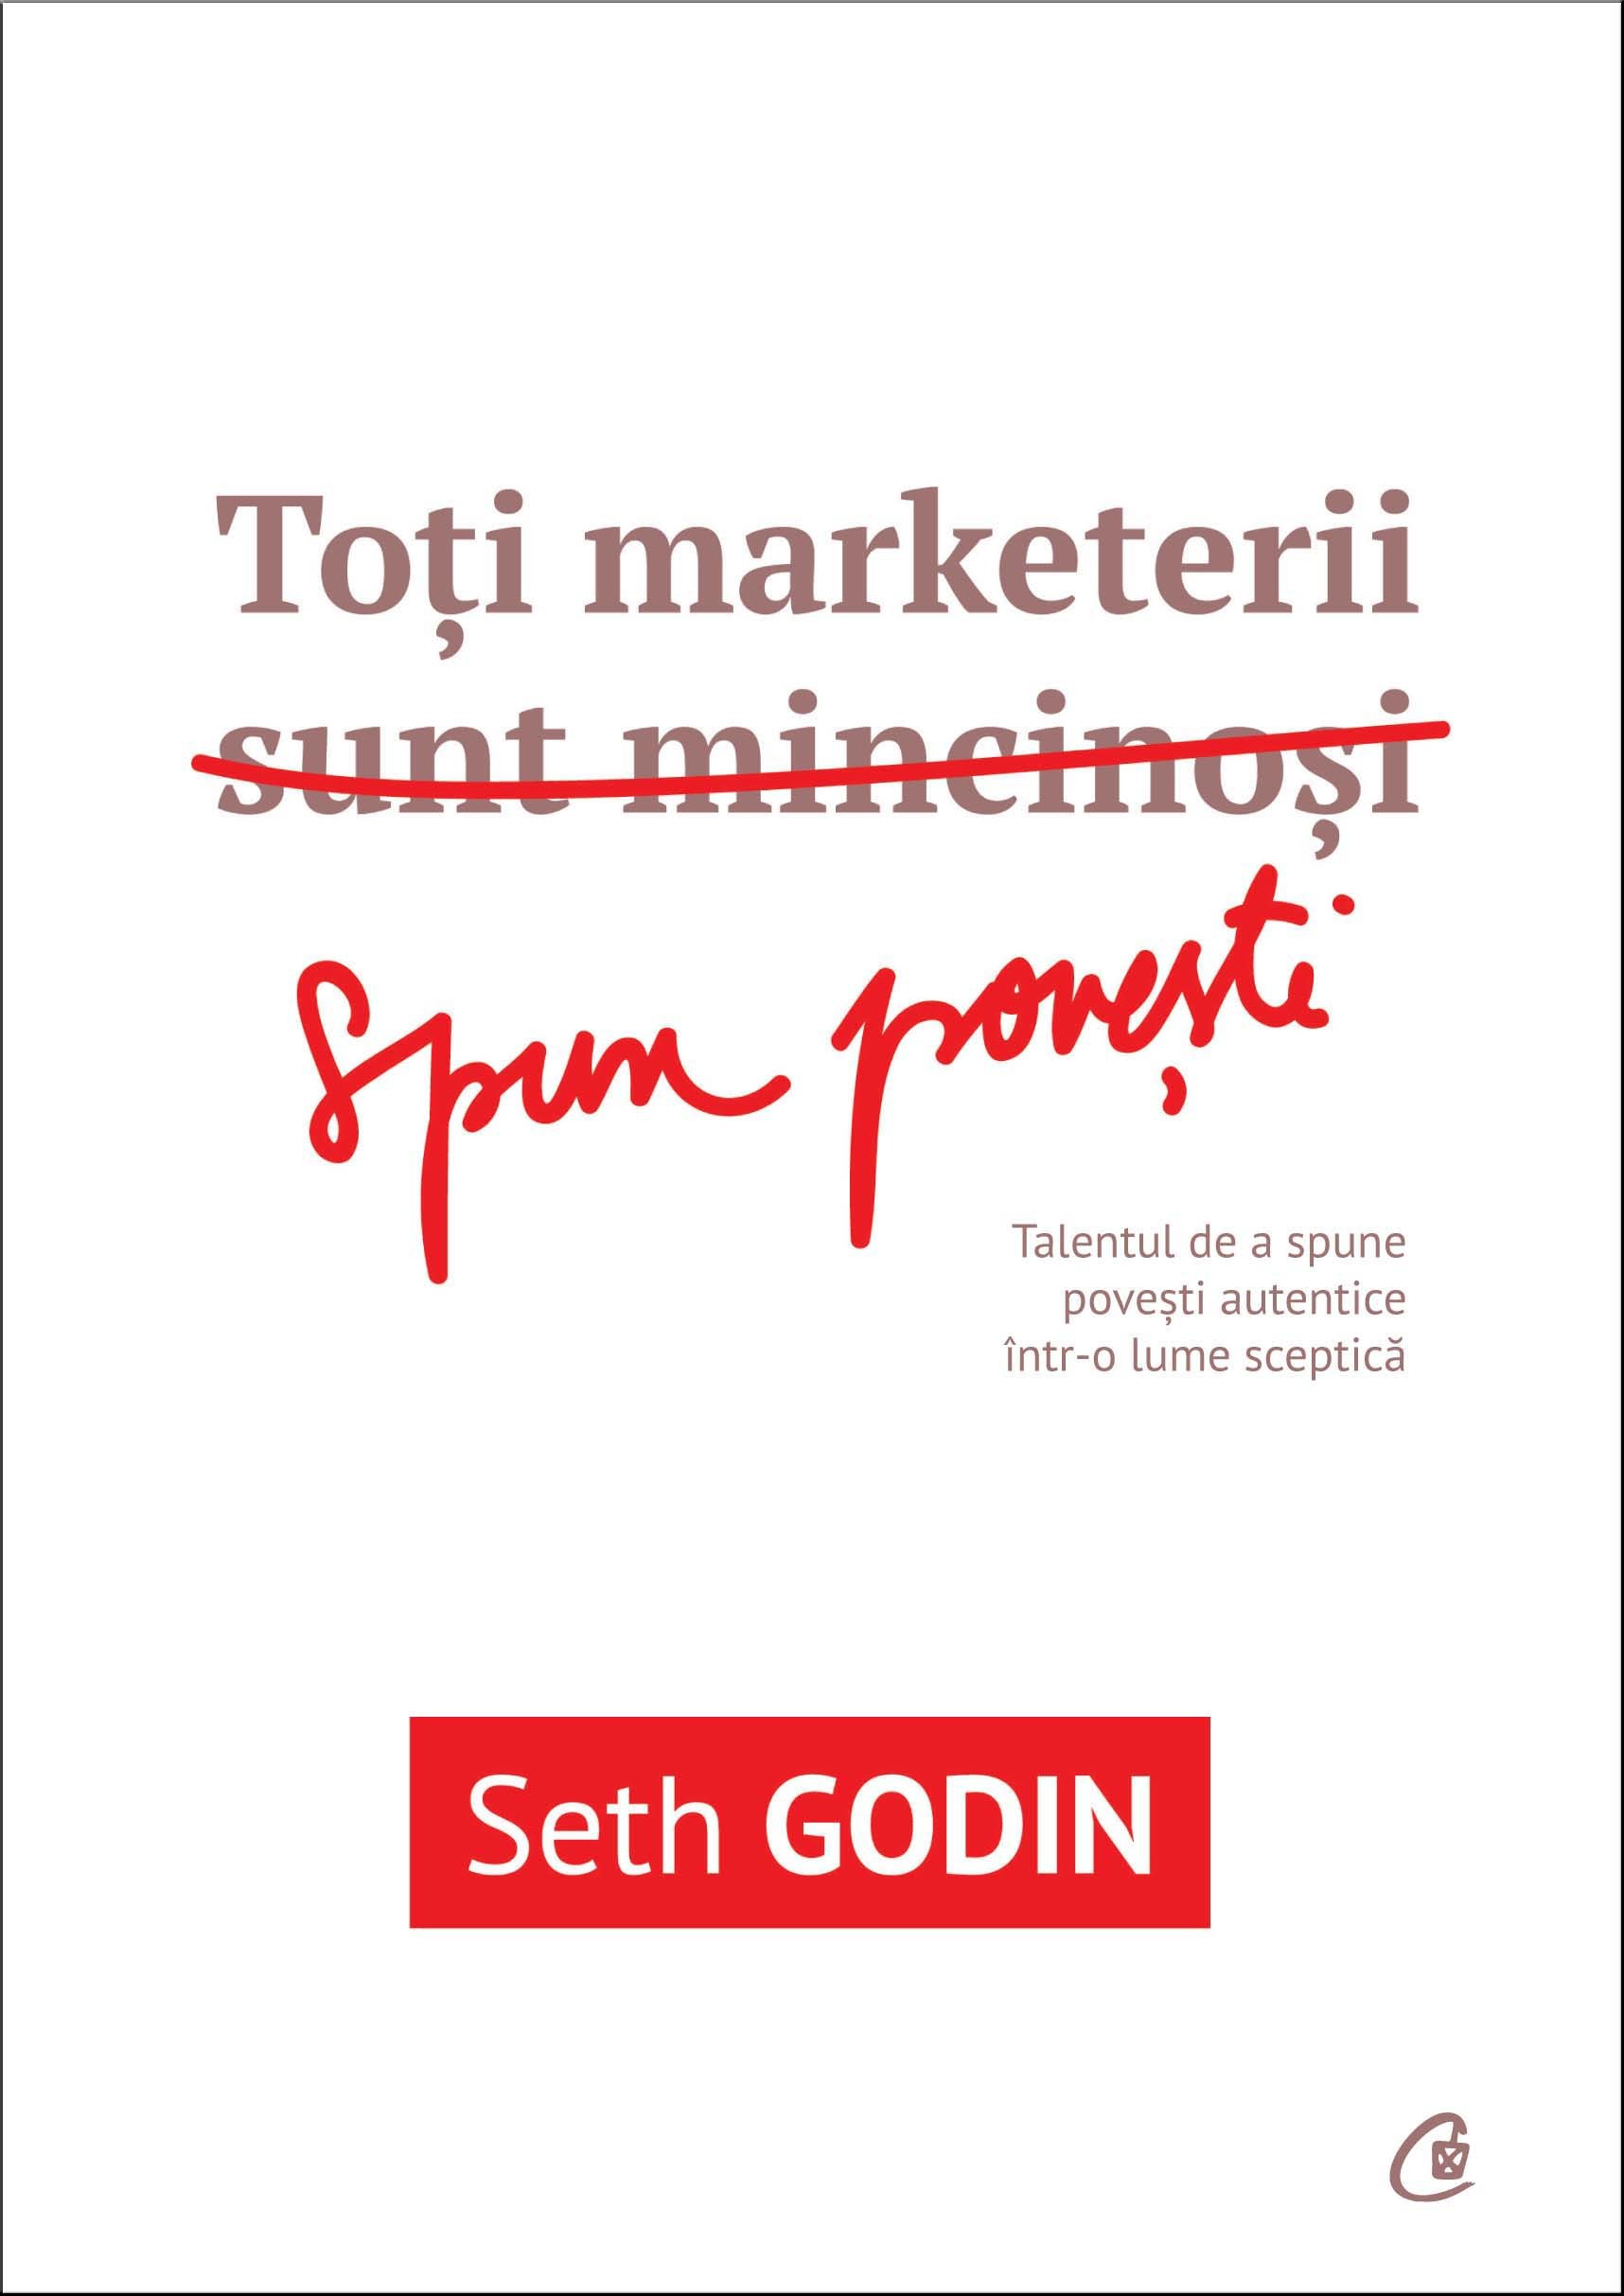 Toti marketerii sunt mincinosi - Seth Godin